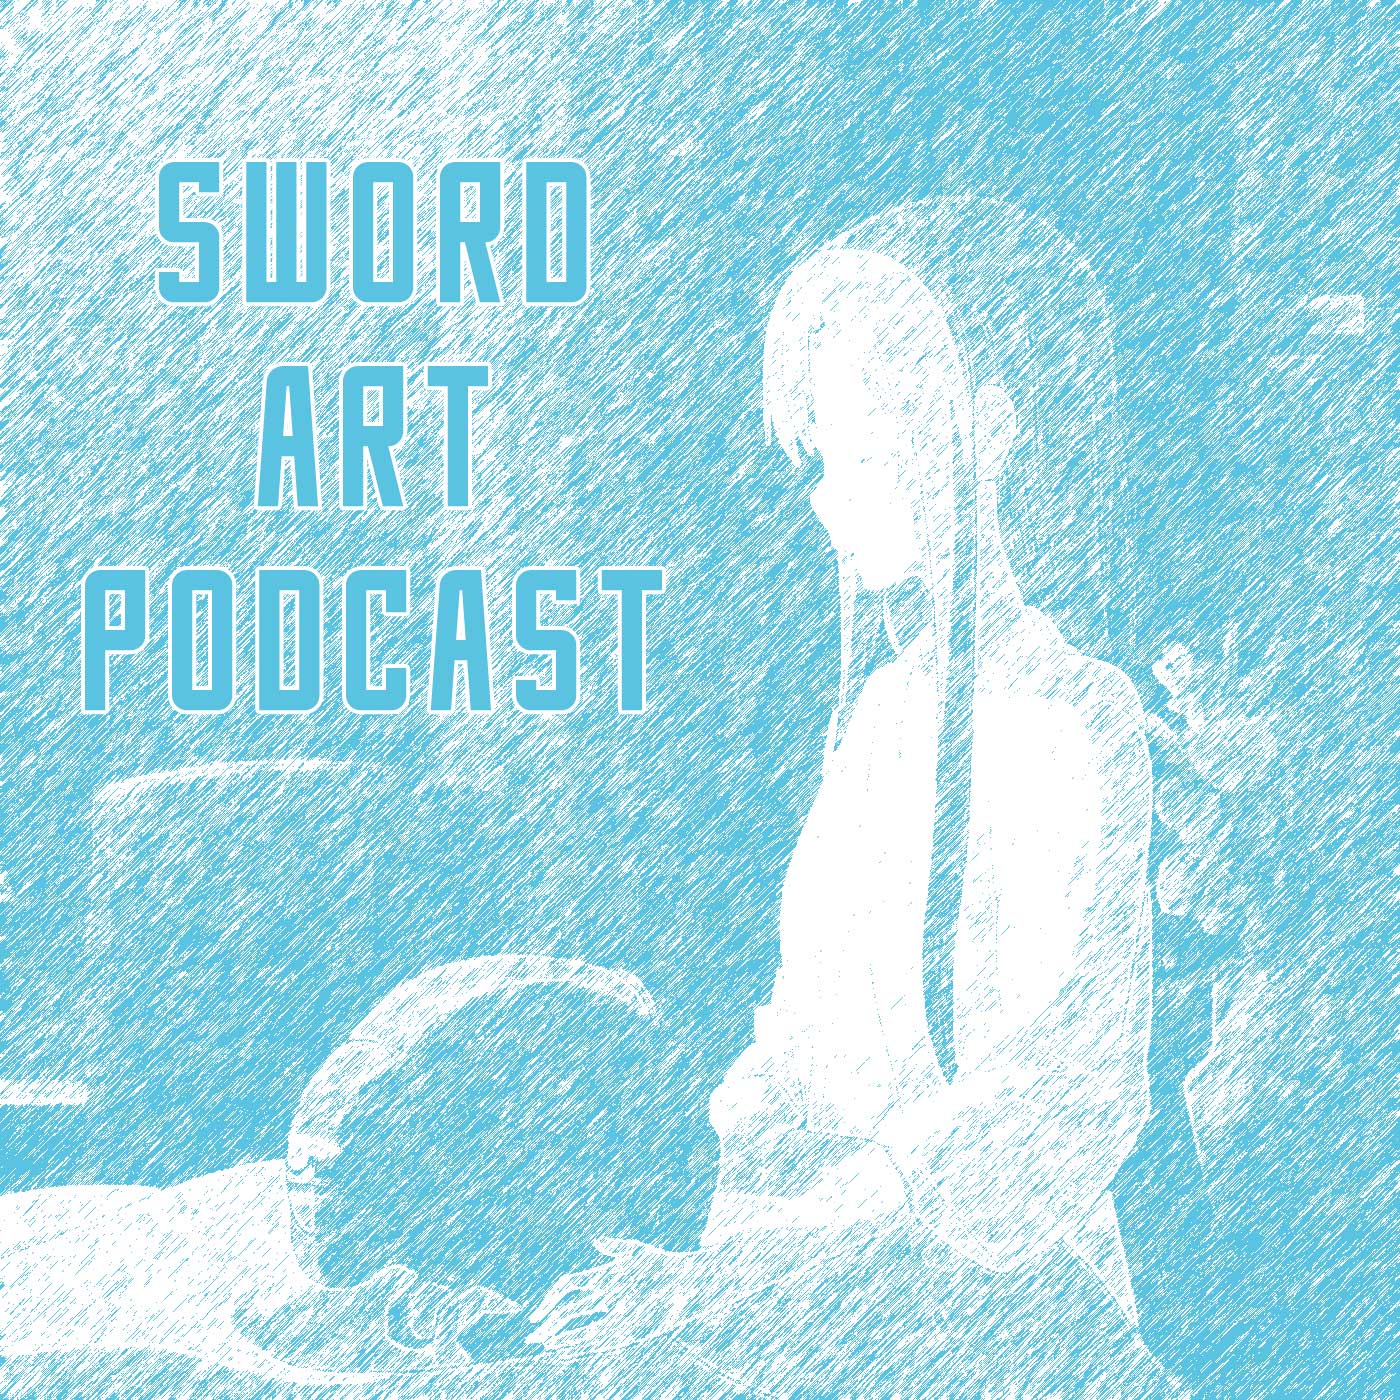 Sword Art Podcast